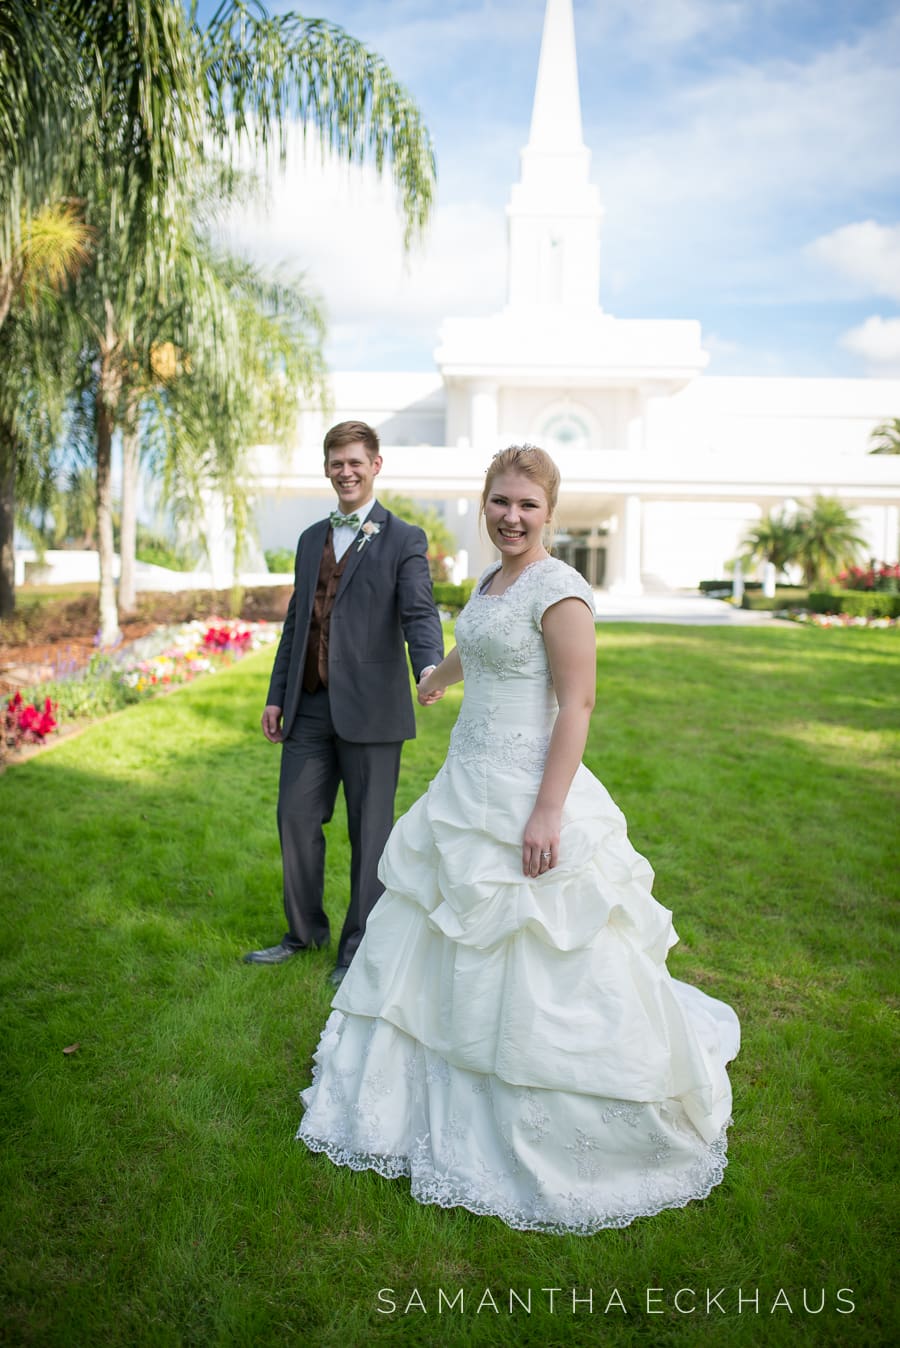 LDS Orlando Florida Temple Wedding